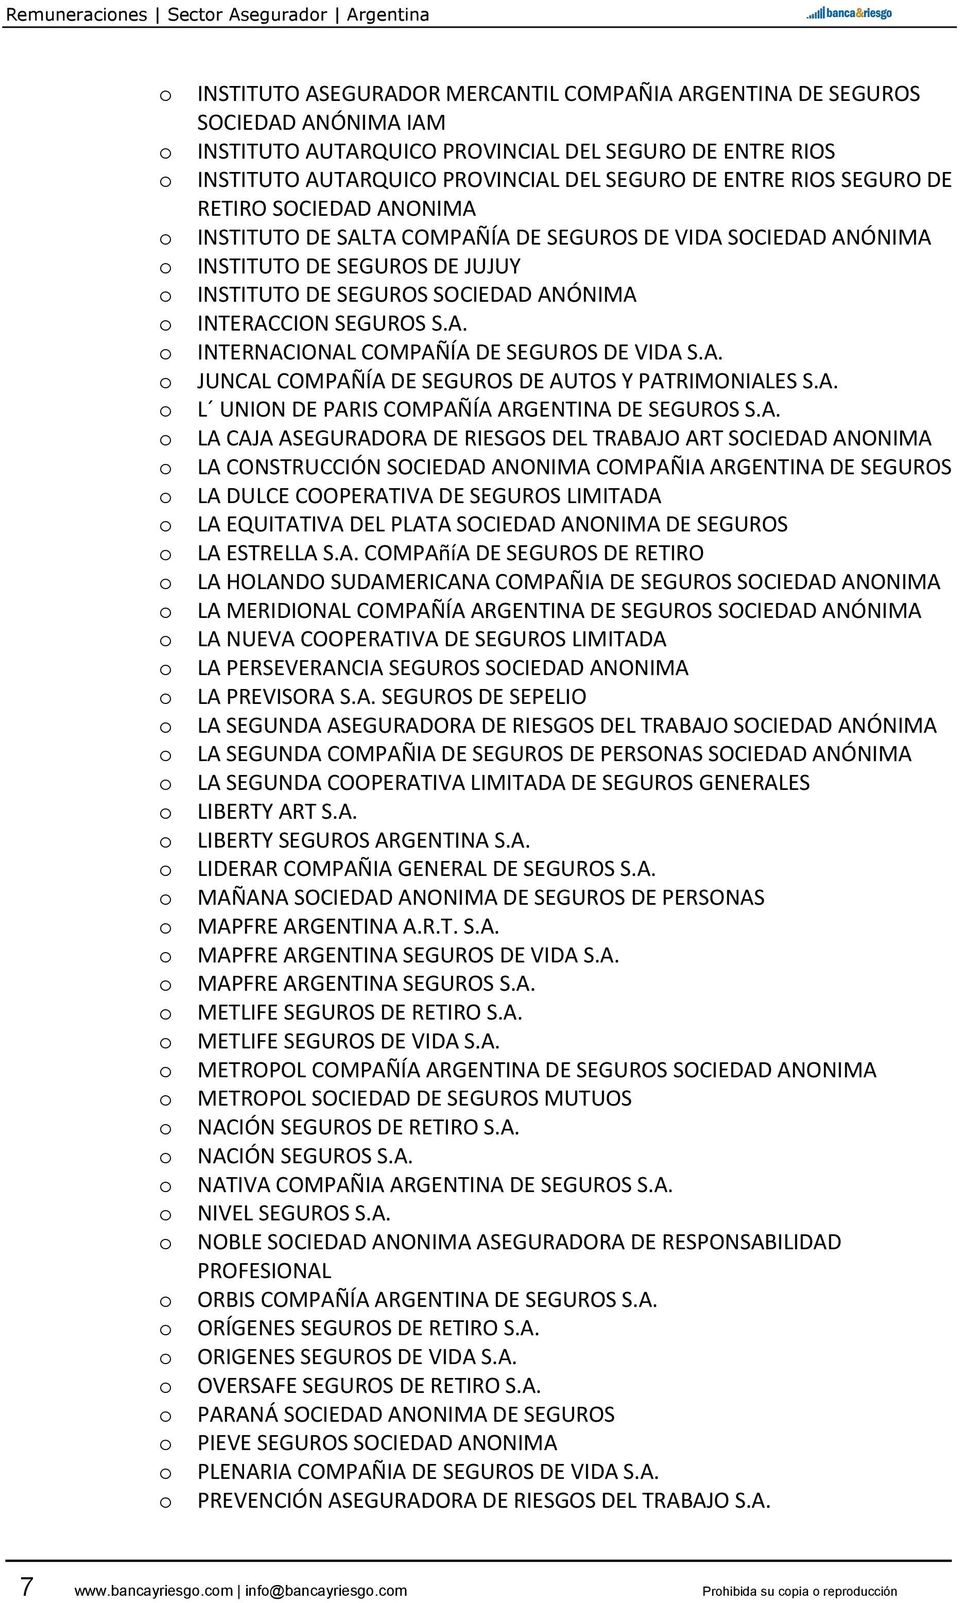 ANÓNIMA INTERACCION SEGUROS S.A. INTERNACIONAL COMPAÑÍA DE SEGUROS DE VIDA S.A. JUNCAL COMPAÑÍA DE SEGUROS DE AUTOS Y PATRIMONIALES S.A. L UNION DE PARIS COMPAÑÍA ARGENTINA DE SEGUROS S.A. LA CAJA